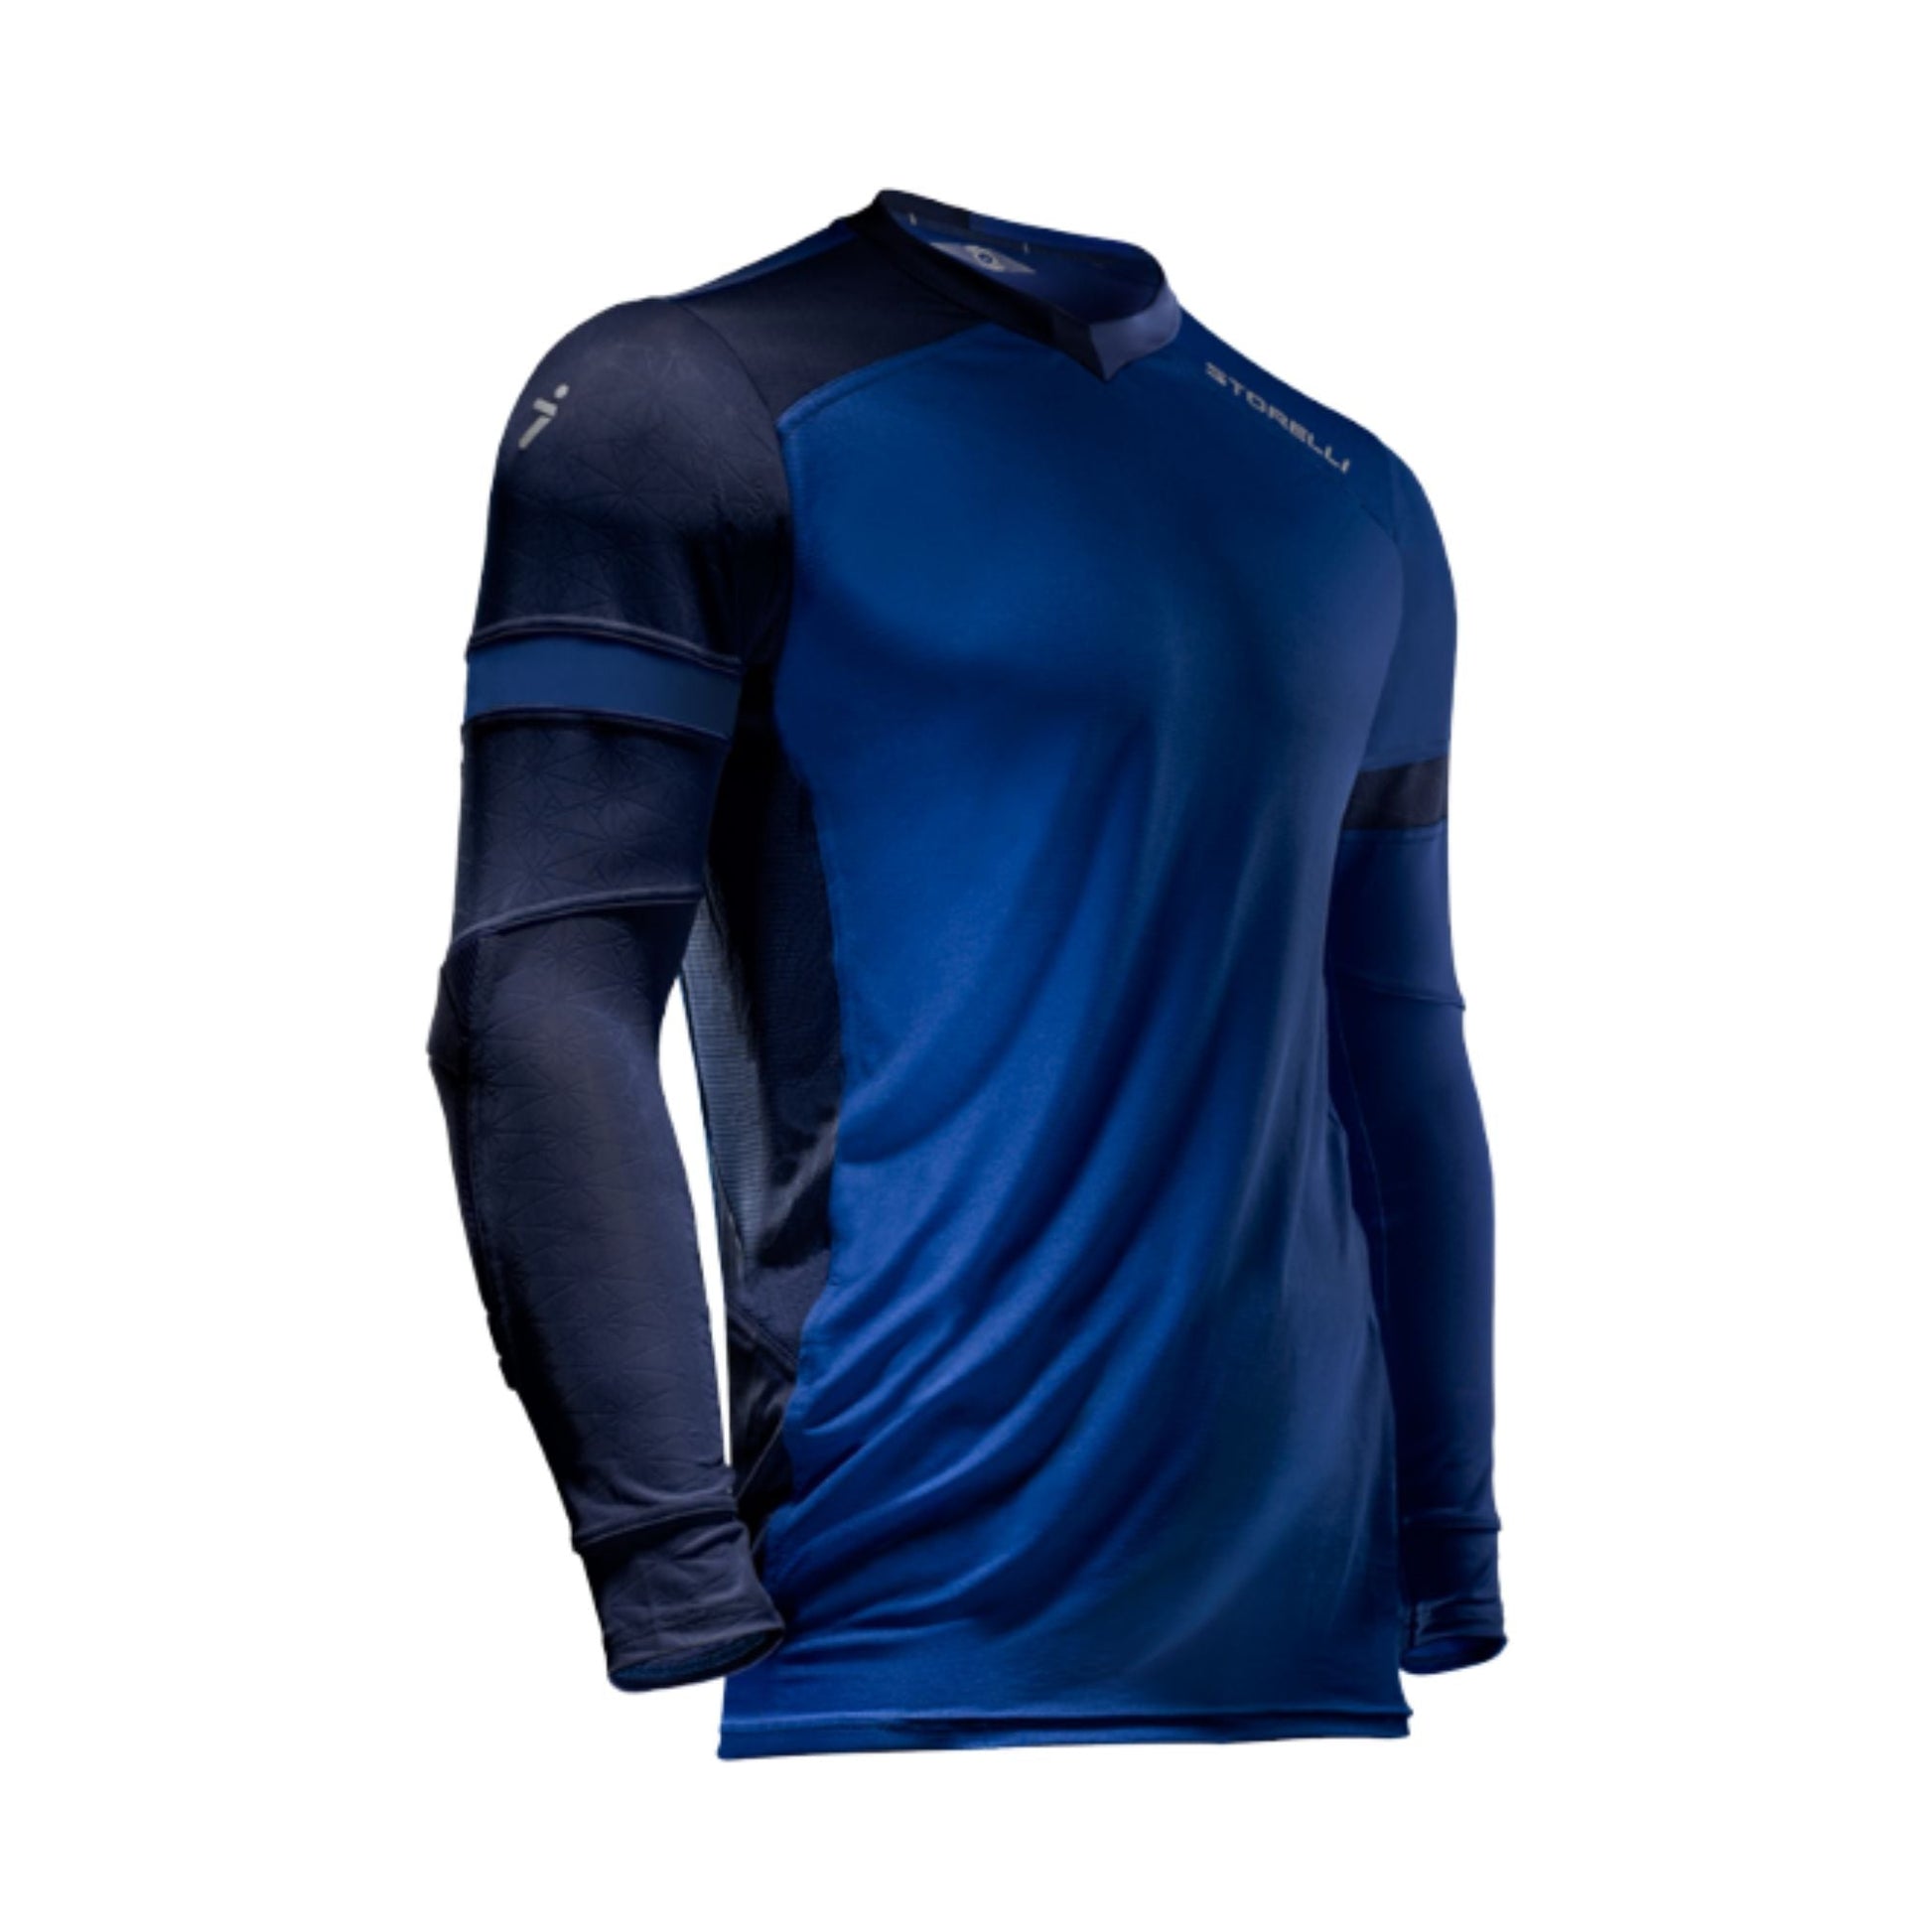 Goalkeeper Jersey by Storelli - 'Hydra' Blue Goalkeeper Jersey ITASPORT 